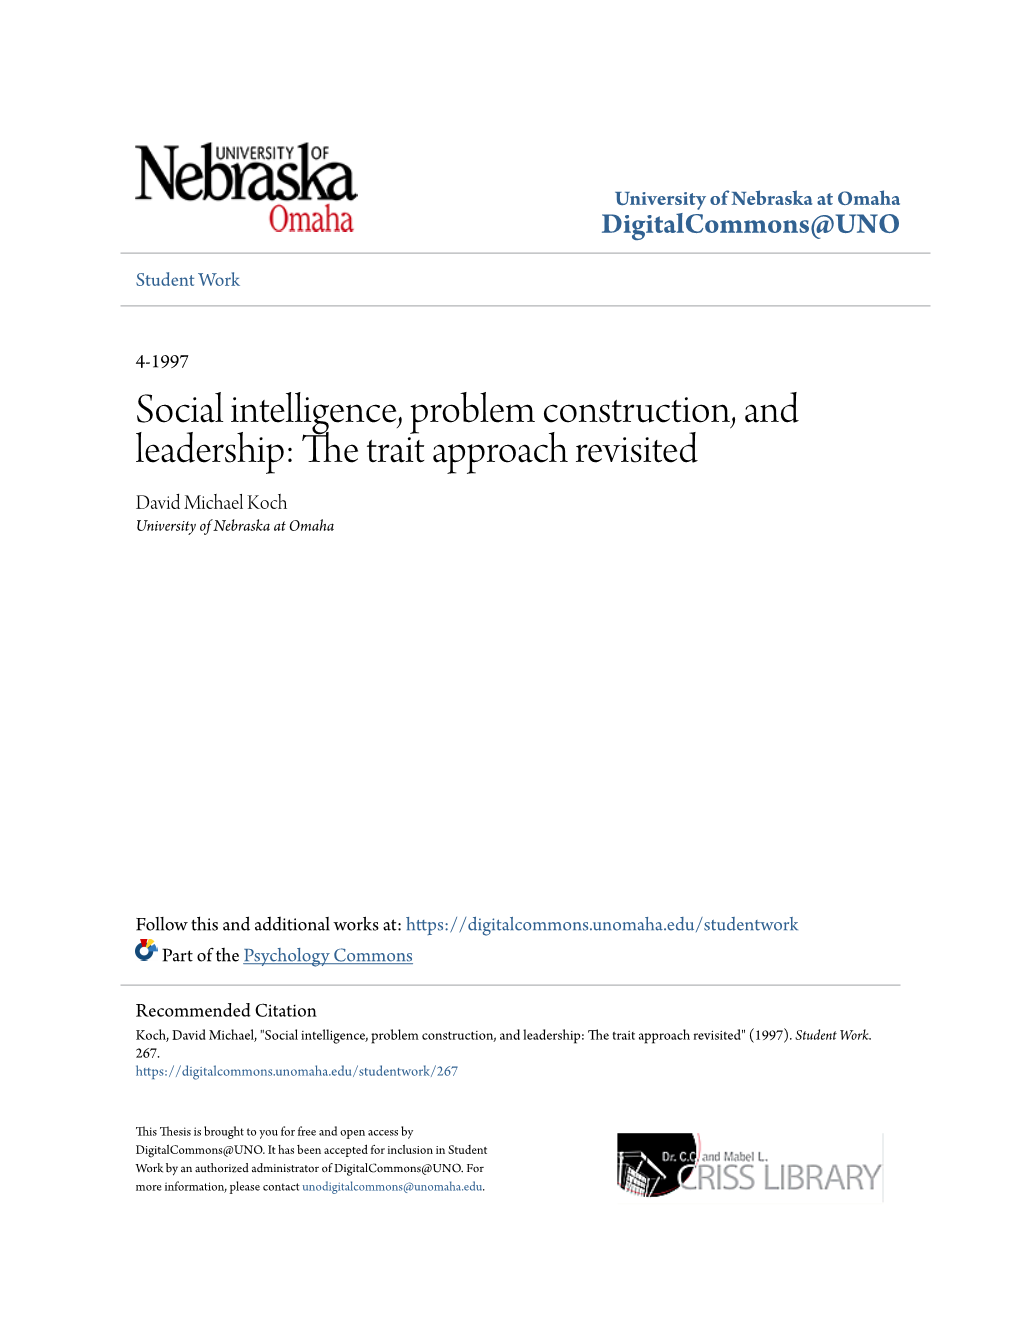 Social Intelligence, Problem Construction, and Leadership: the Trait Approach Revisited David Michael Koch University of Nebraska at Omaha